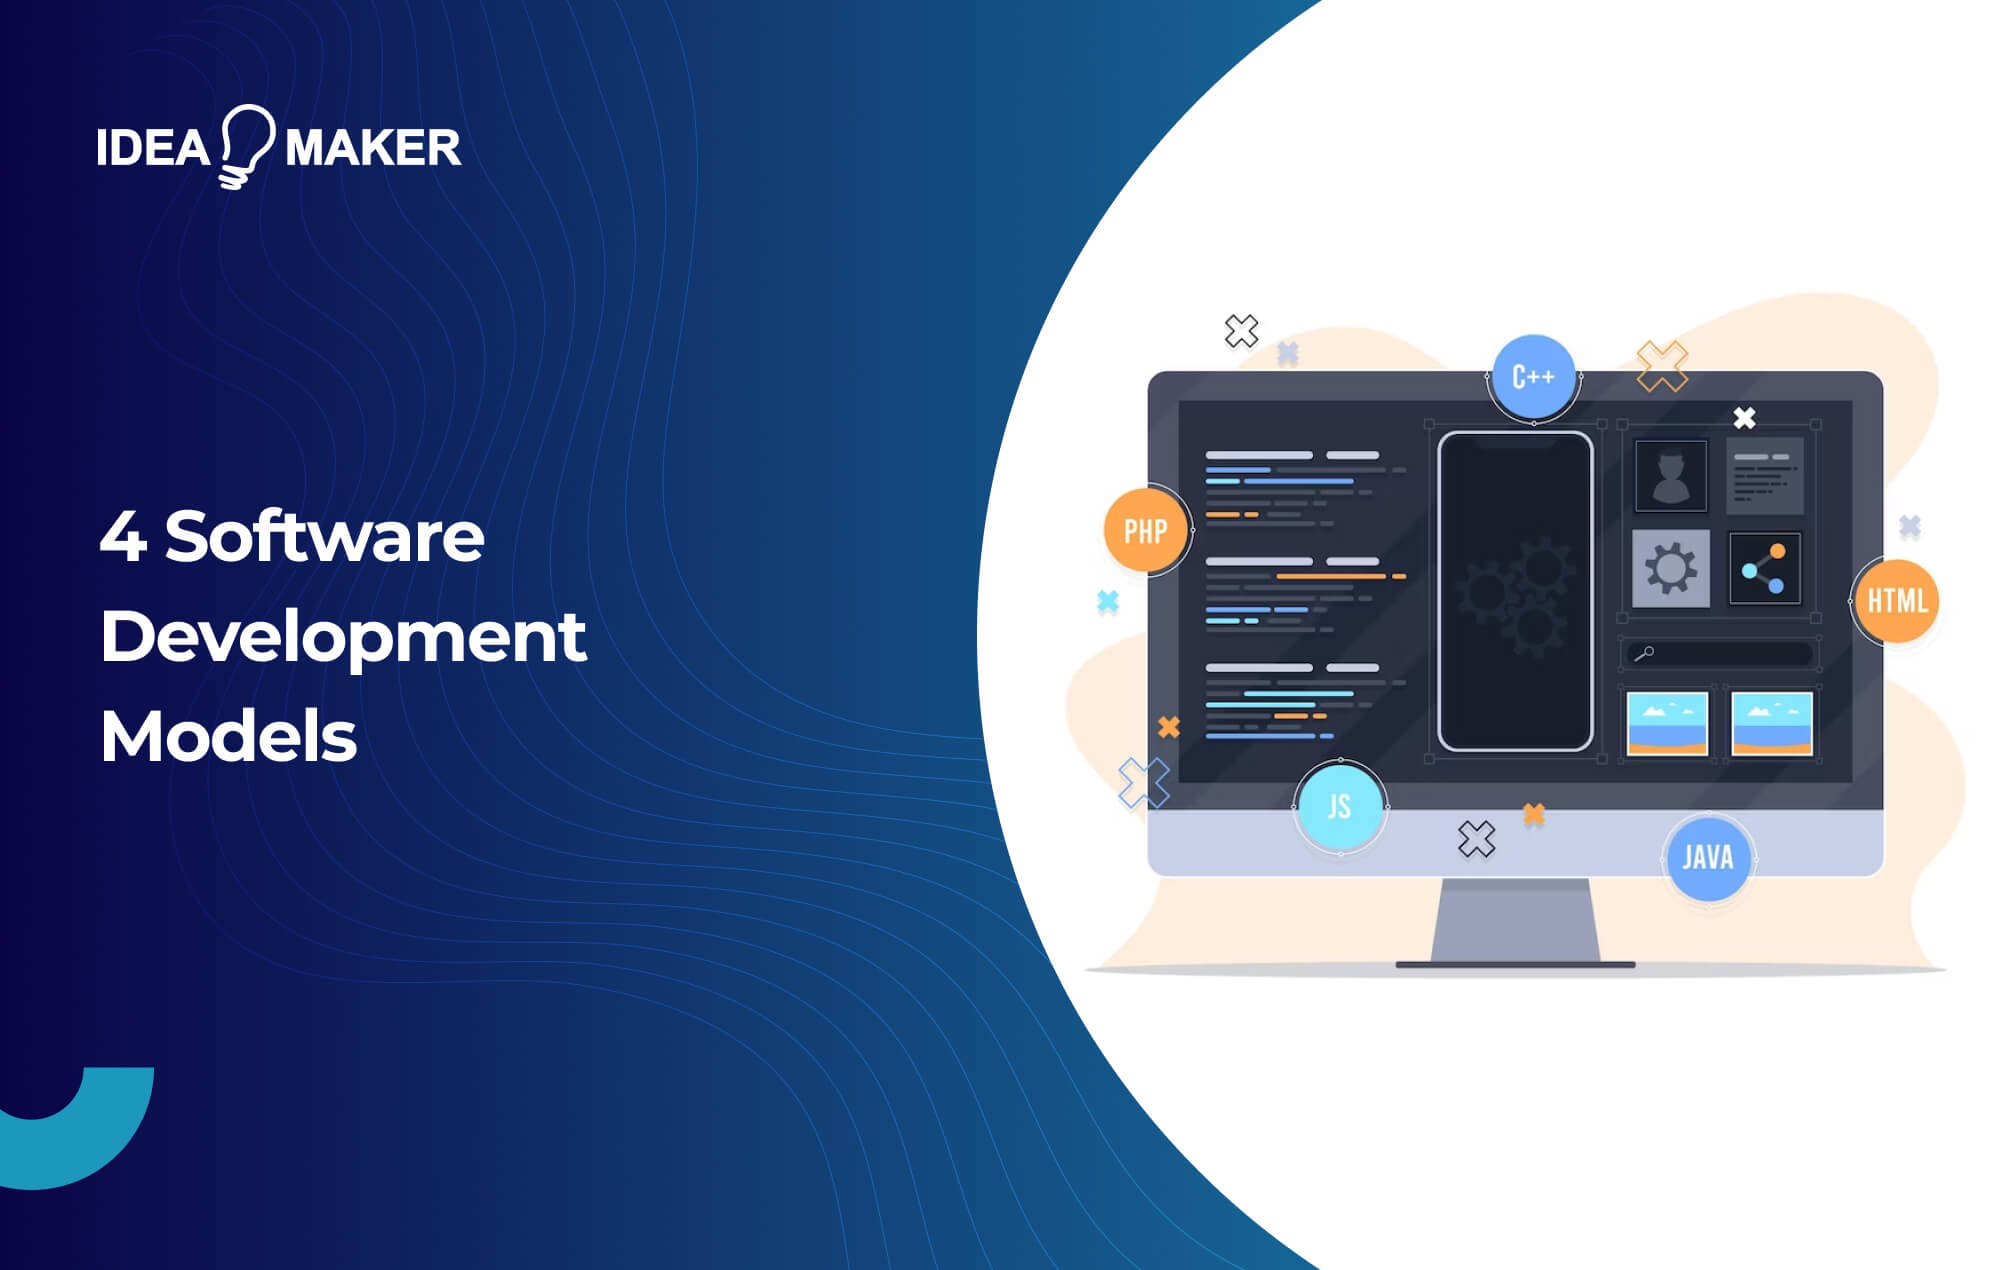 Ideamaker - 4 Software Development Models